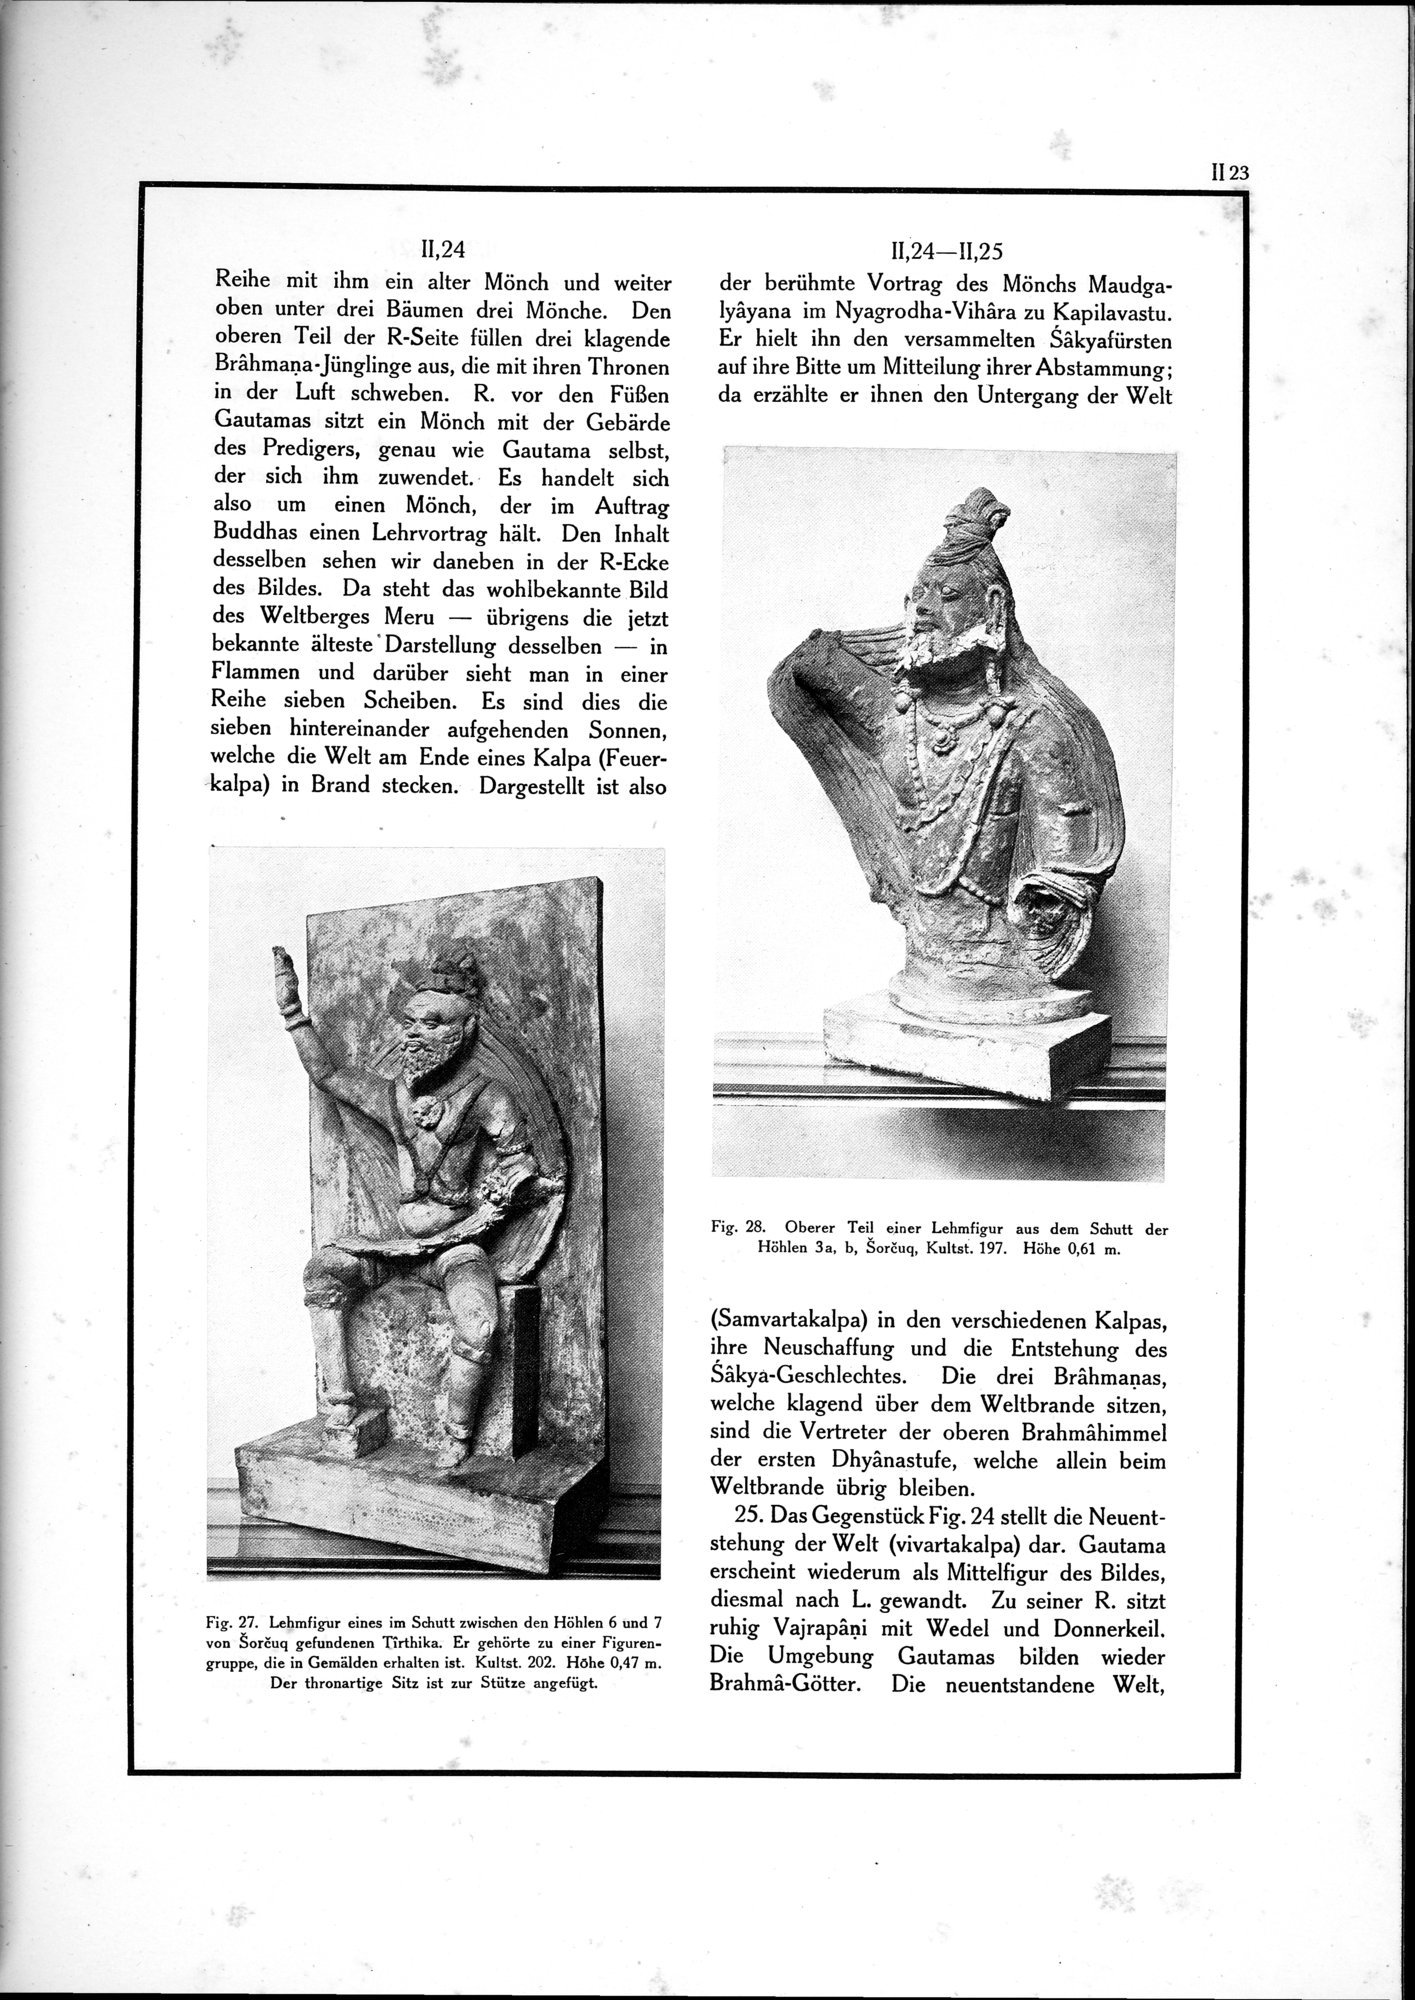 Alt-Kutscha : vol.1 / Page 129 (Grayscale High Resolution Image)